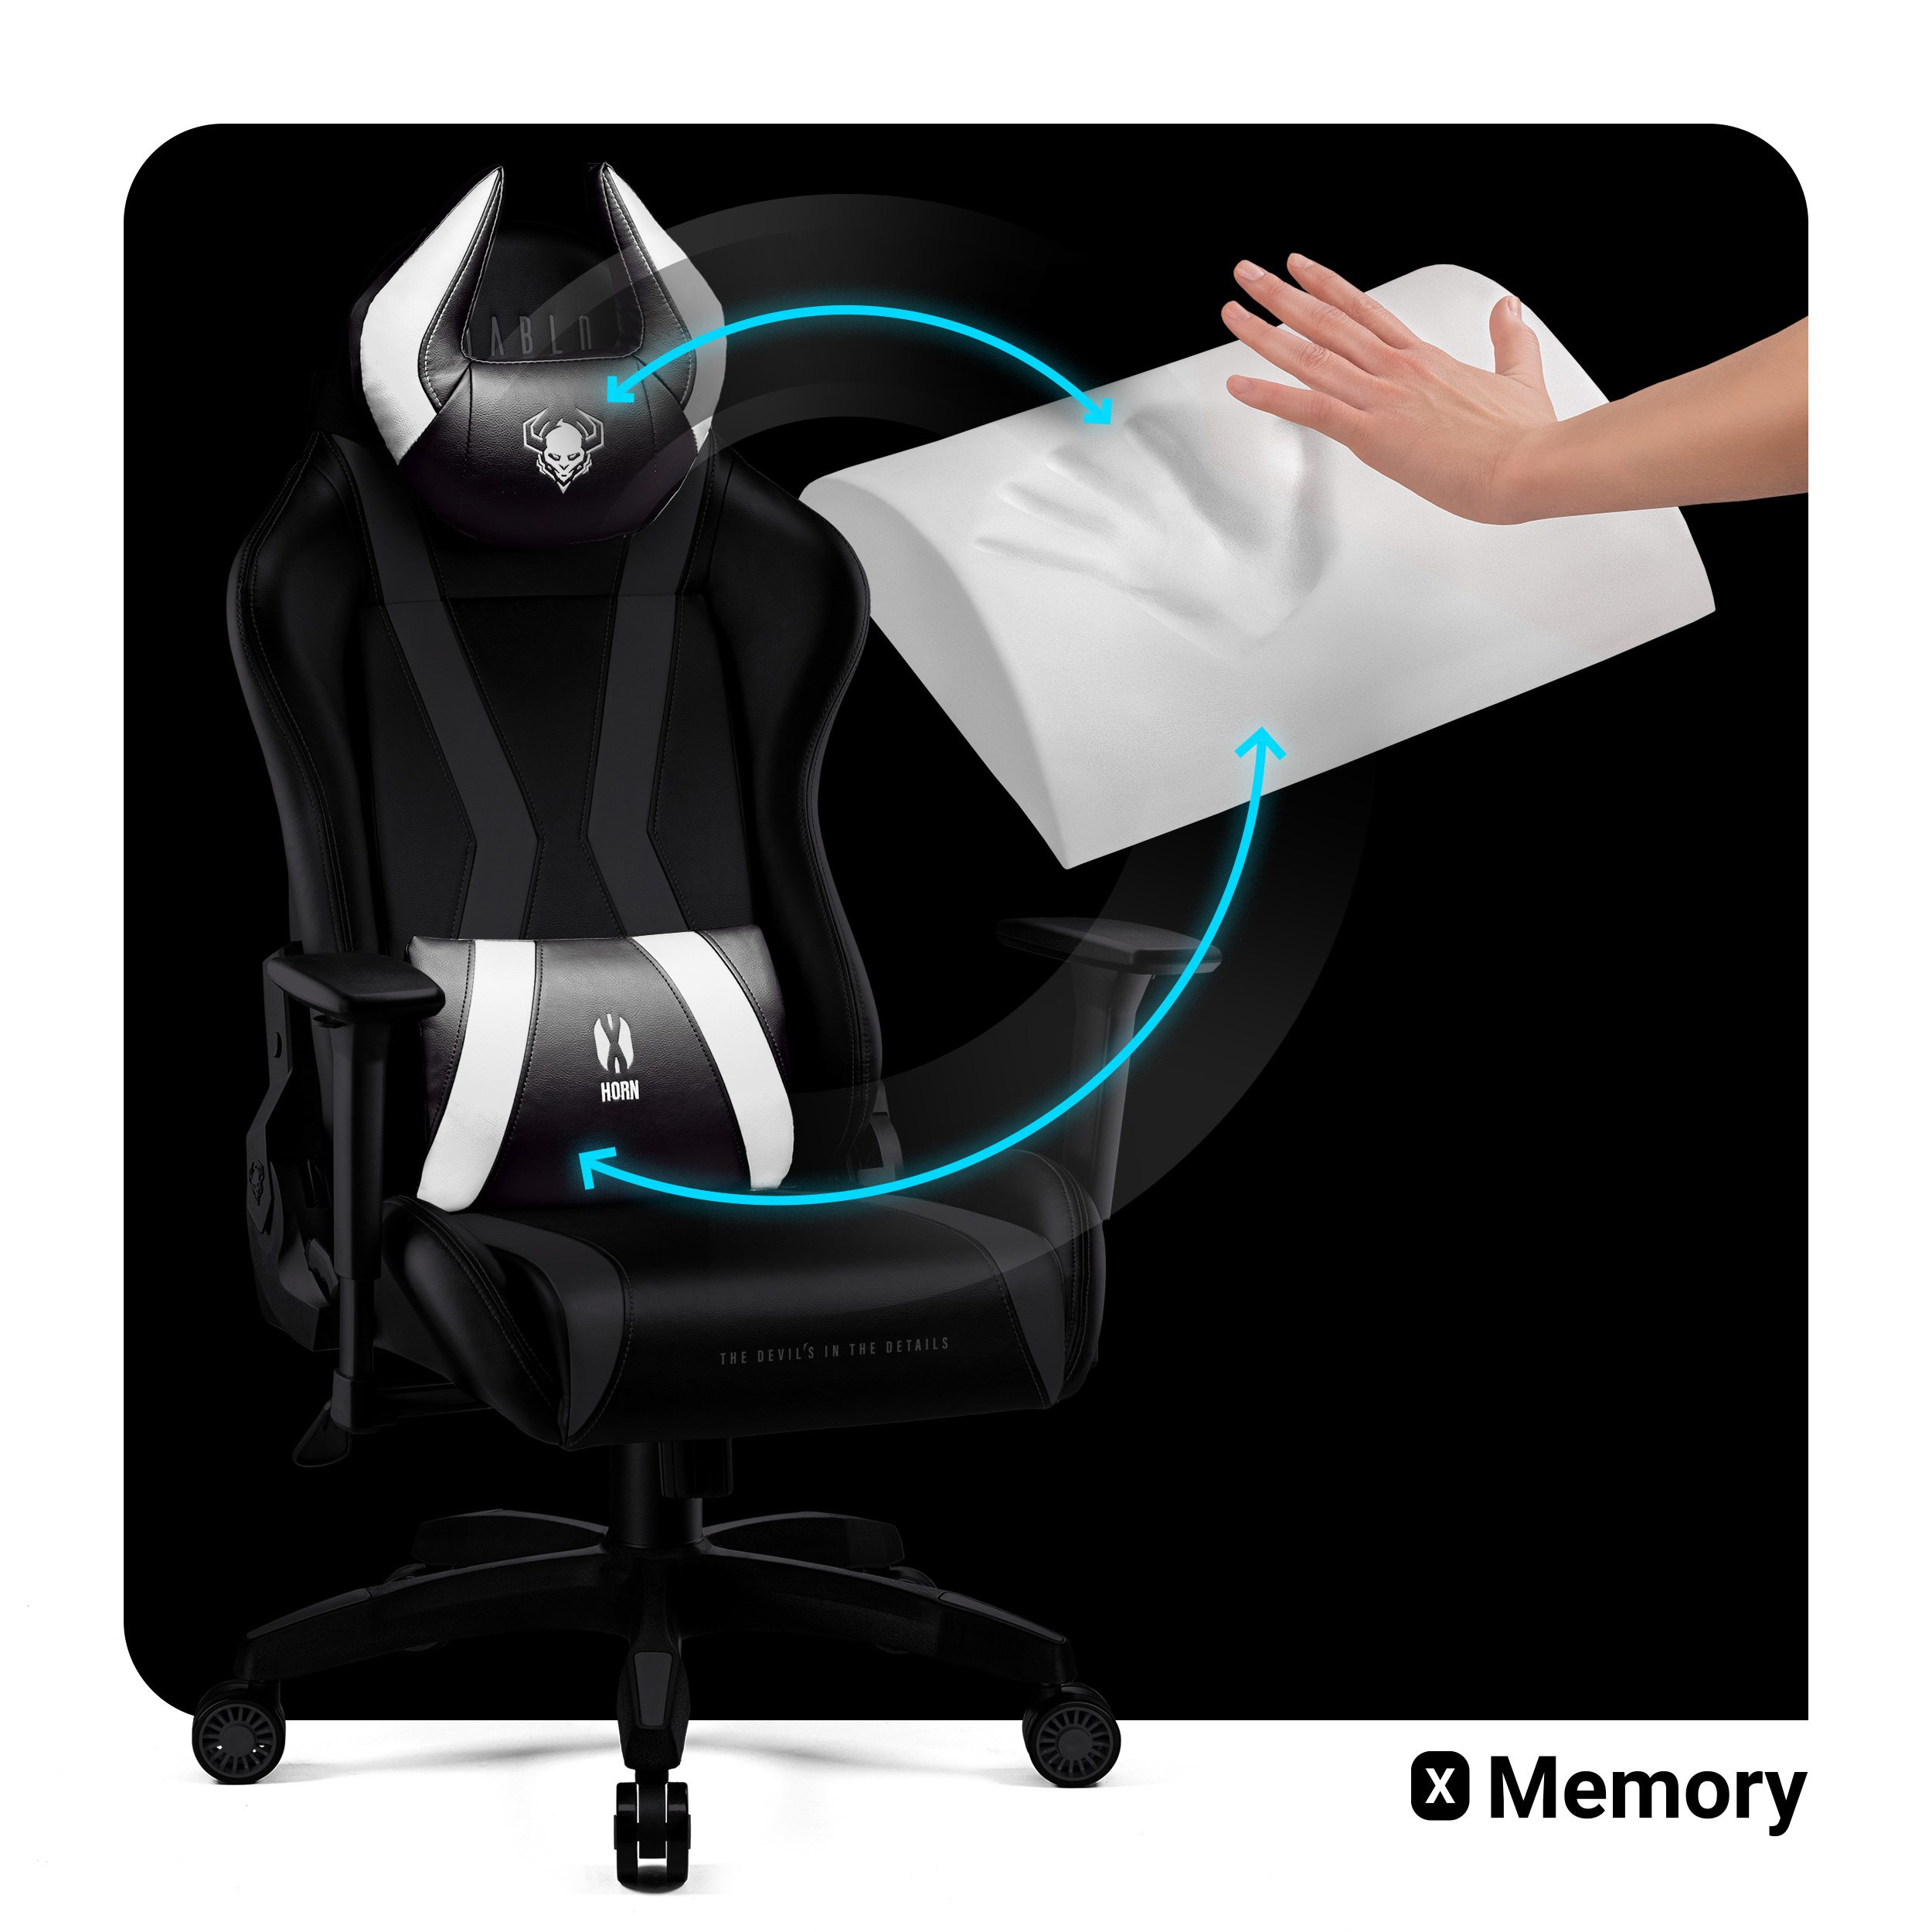 CHAIRS Gaming X-HORN STUHL DIABLO NORMAL GAMING Chair, black/white 2.0